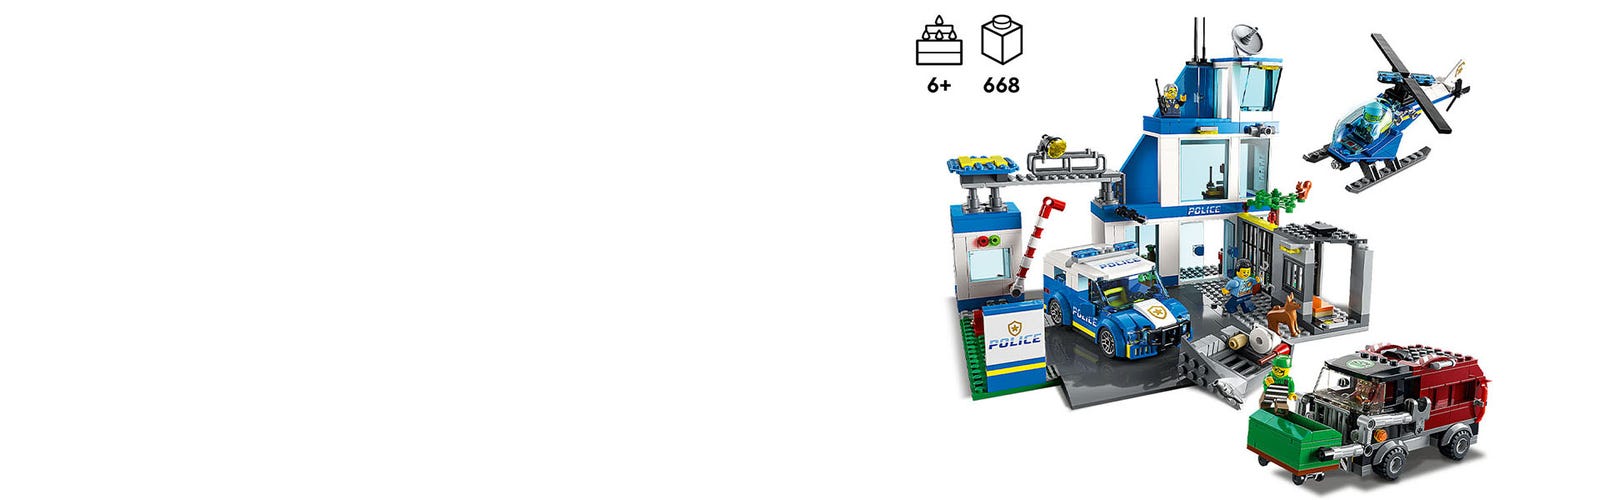 LEGO 60316 Police Station - LEGO City - BricksDirect Condition New.